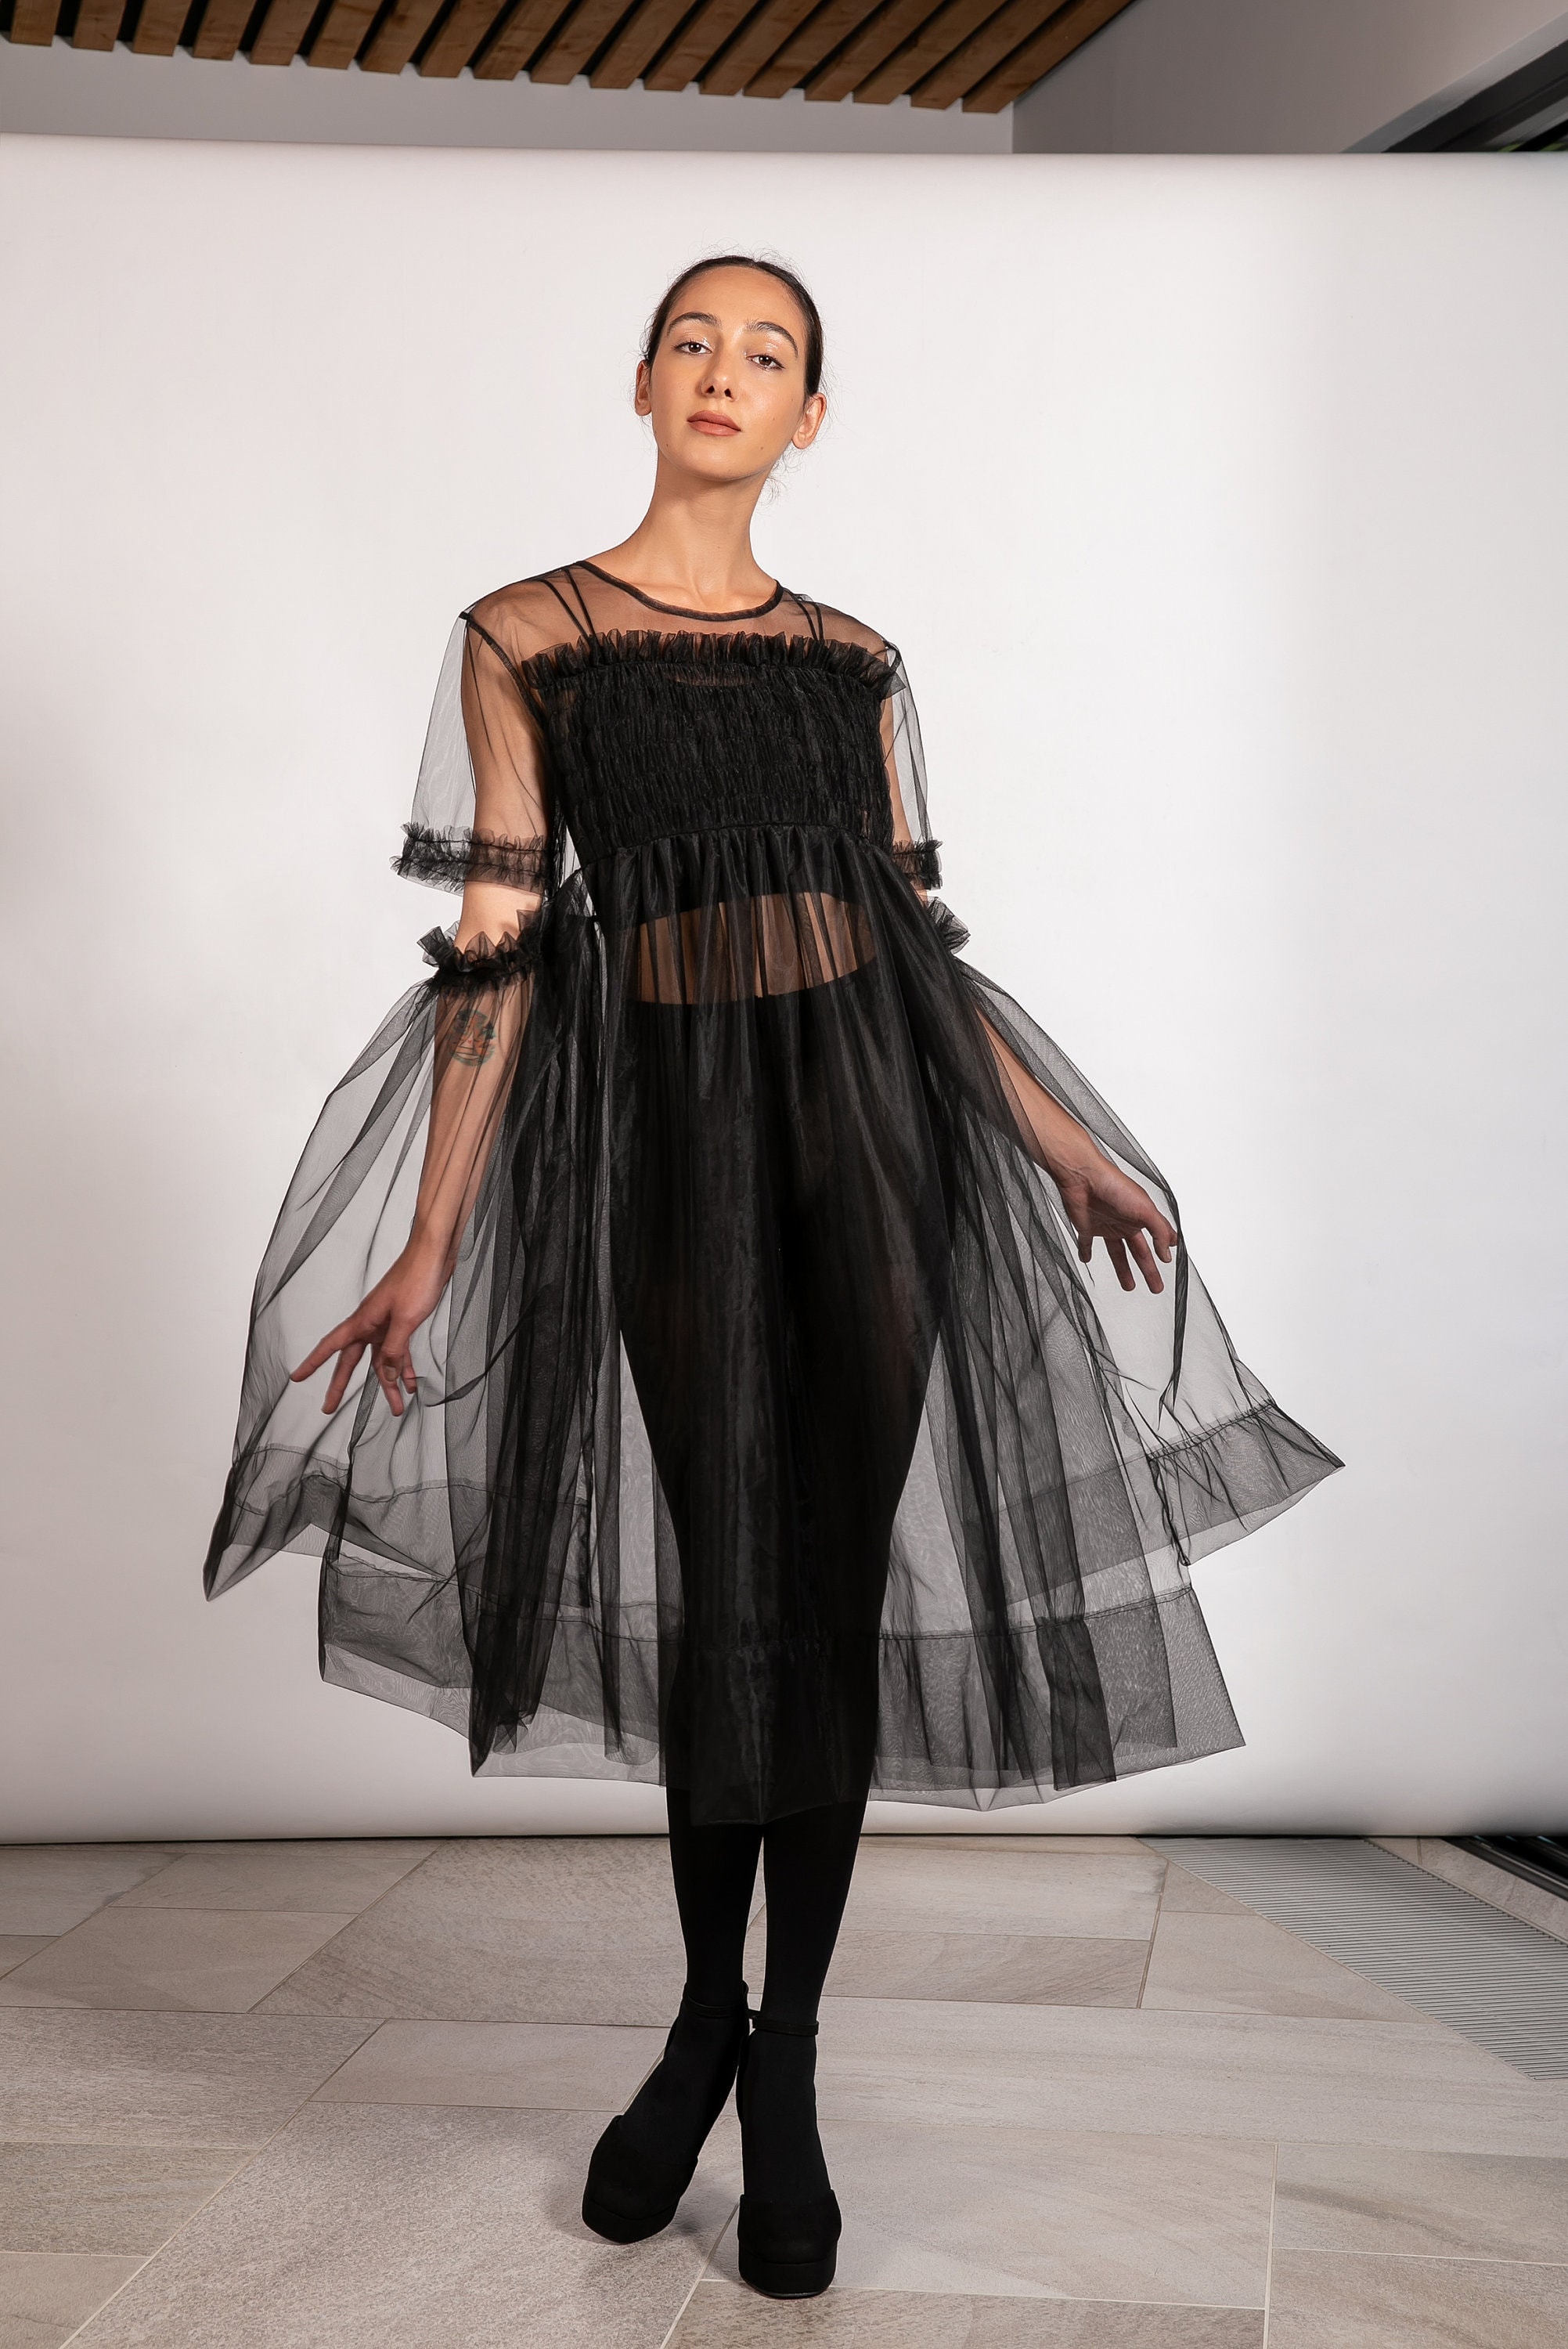 Black Tulle Dress, Sheer Party Dress, Tulle Cocktail Dress, Villanelle  Dress, See Through Black Dress, Avant Garde Clothing -  Norway